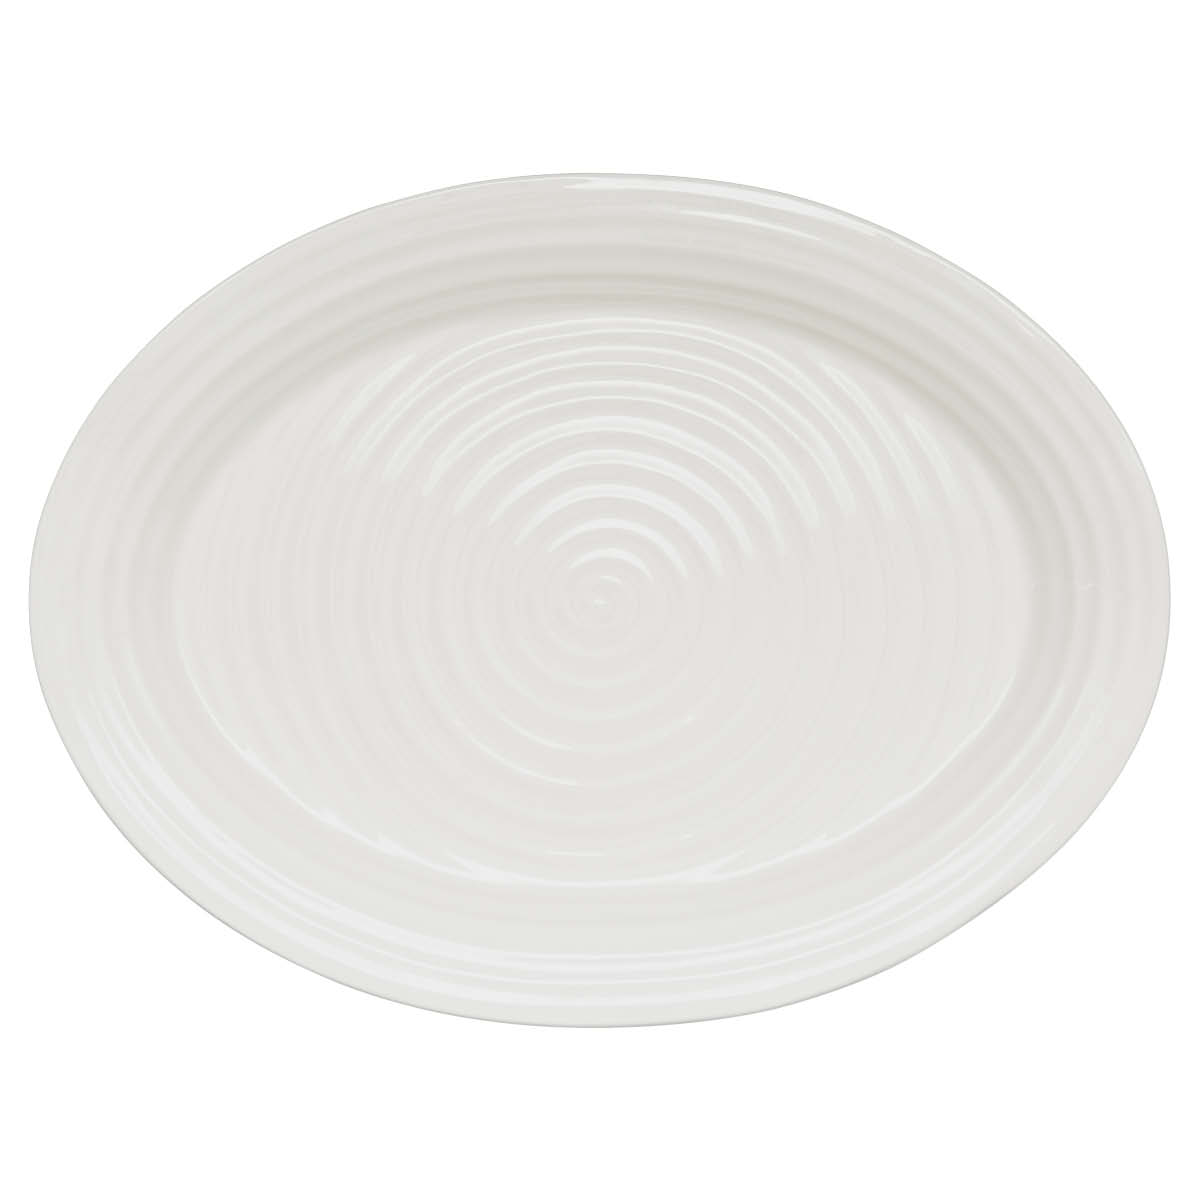 Sophie Conran Large Platter, White image number null